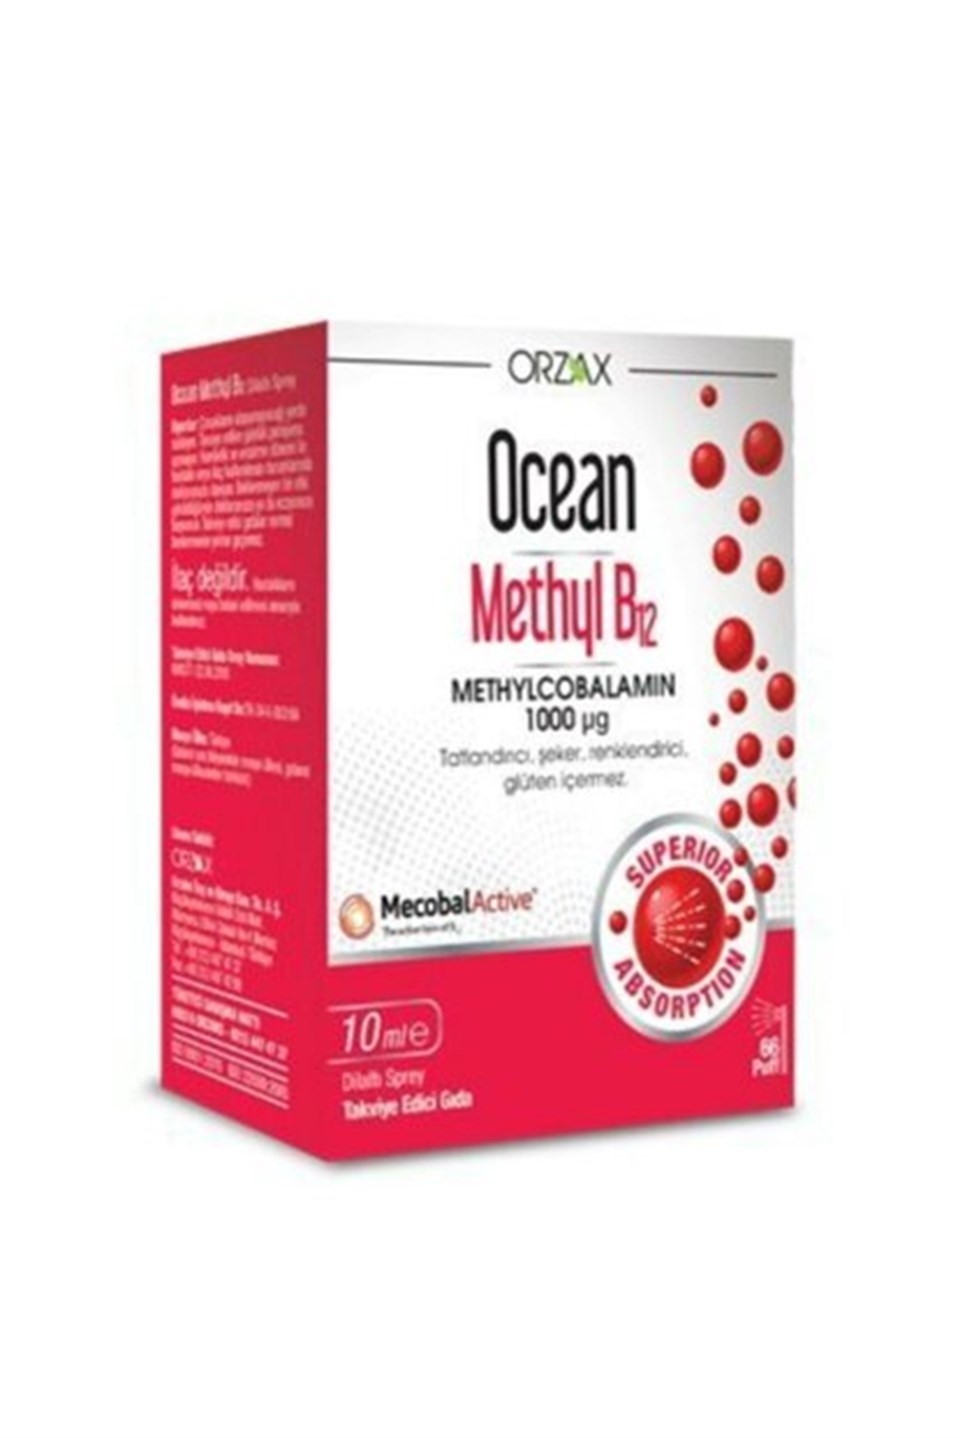 спрей orzax ocean methyl b12 1000 мкг 5 упаковок по 10 мл Ocean Methyl B12 1000 мг 5 мл спрей ORZAX